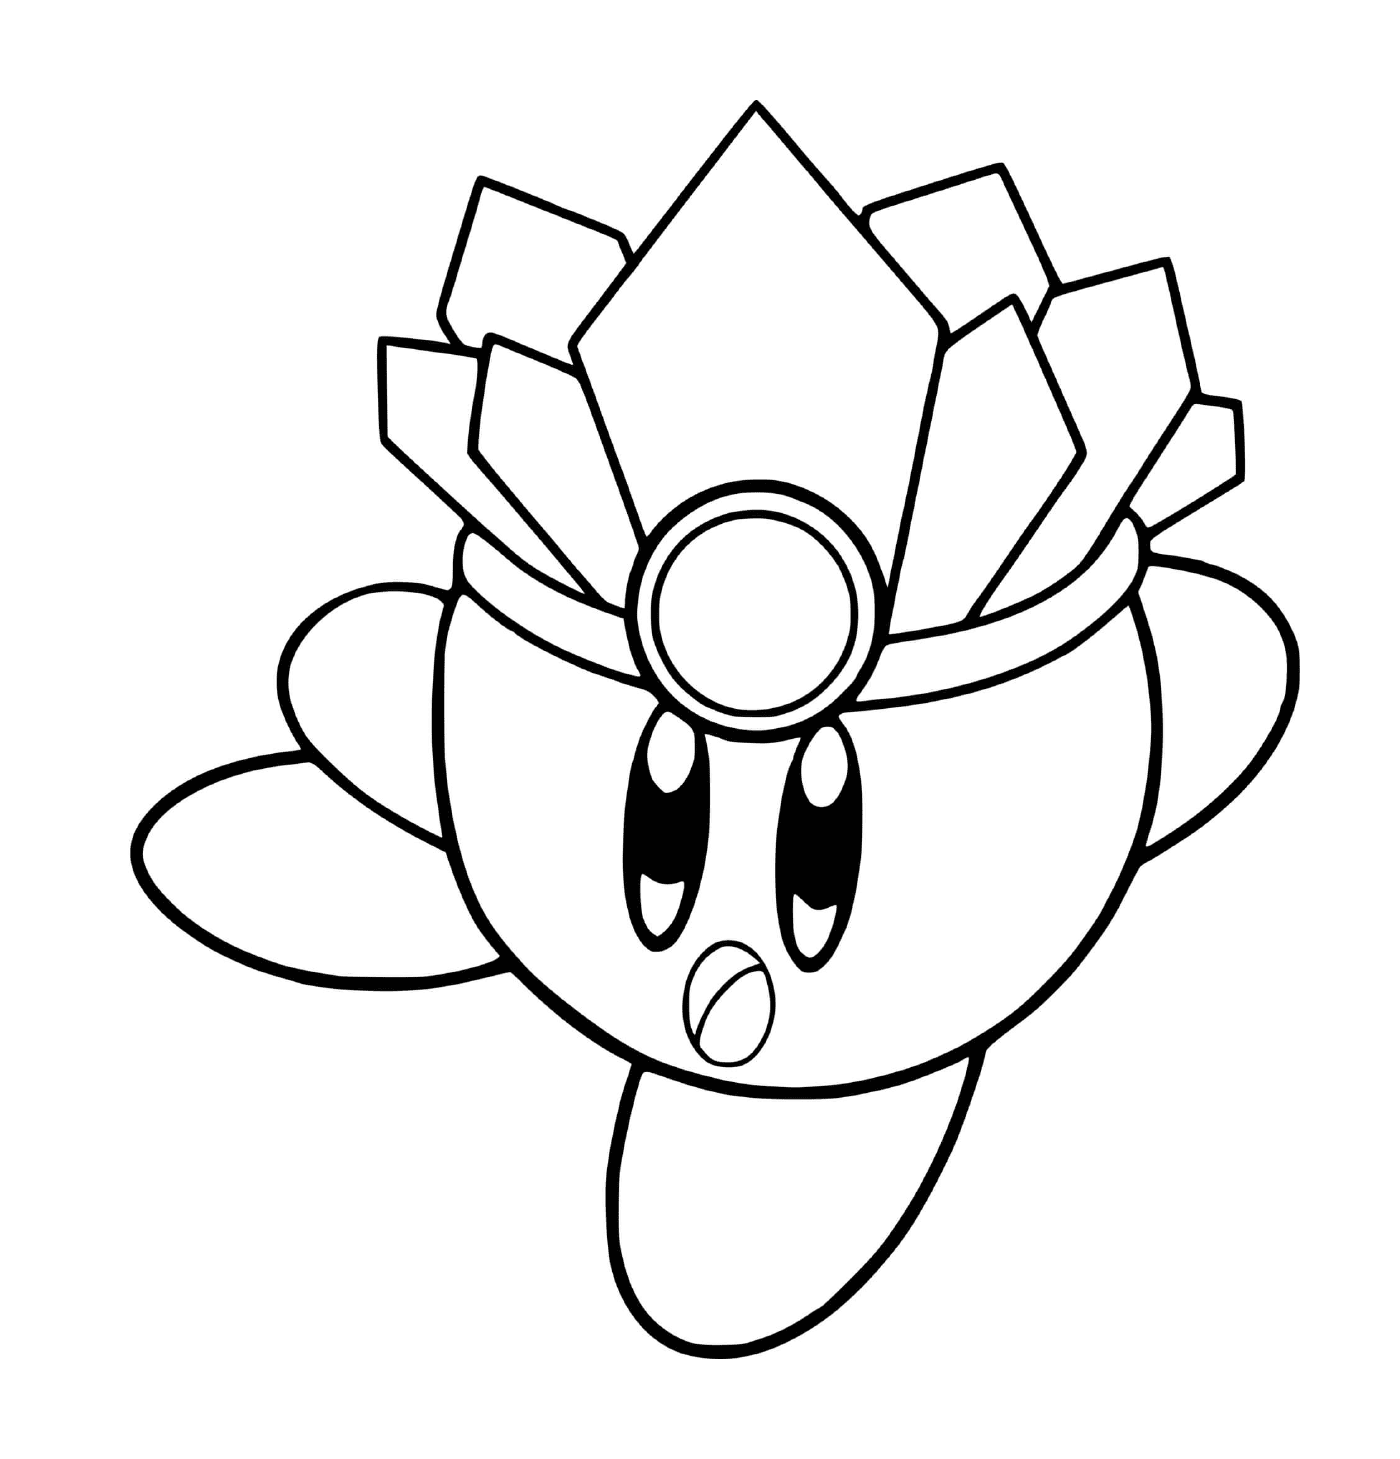  Kirby com uma coroa fofa 